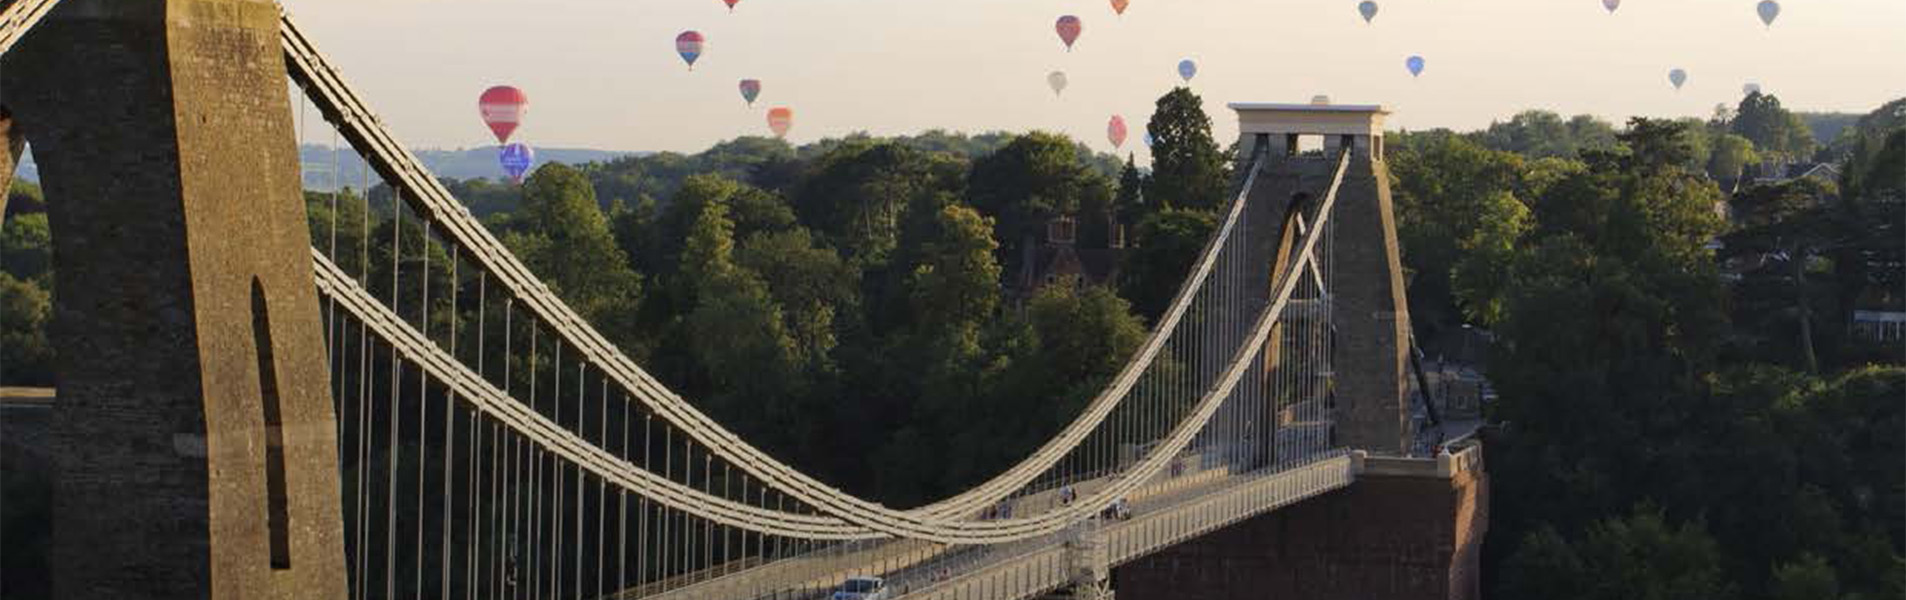 Bridge with hot air baloons